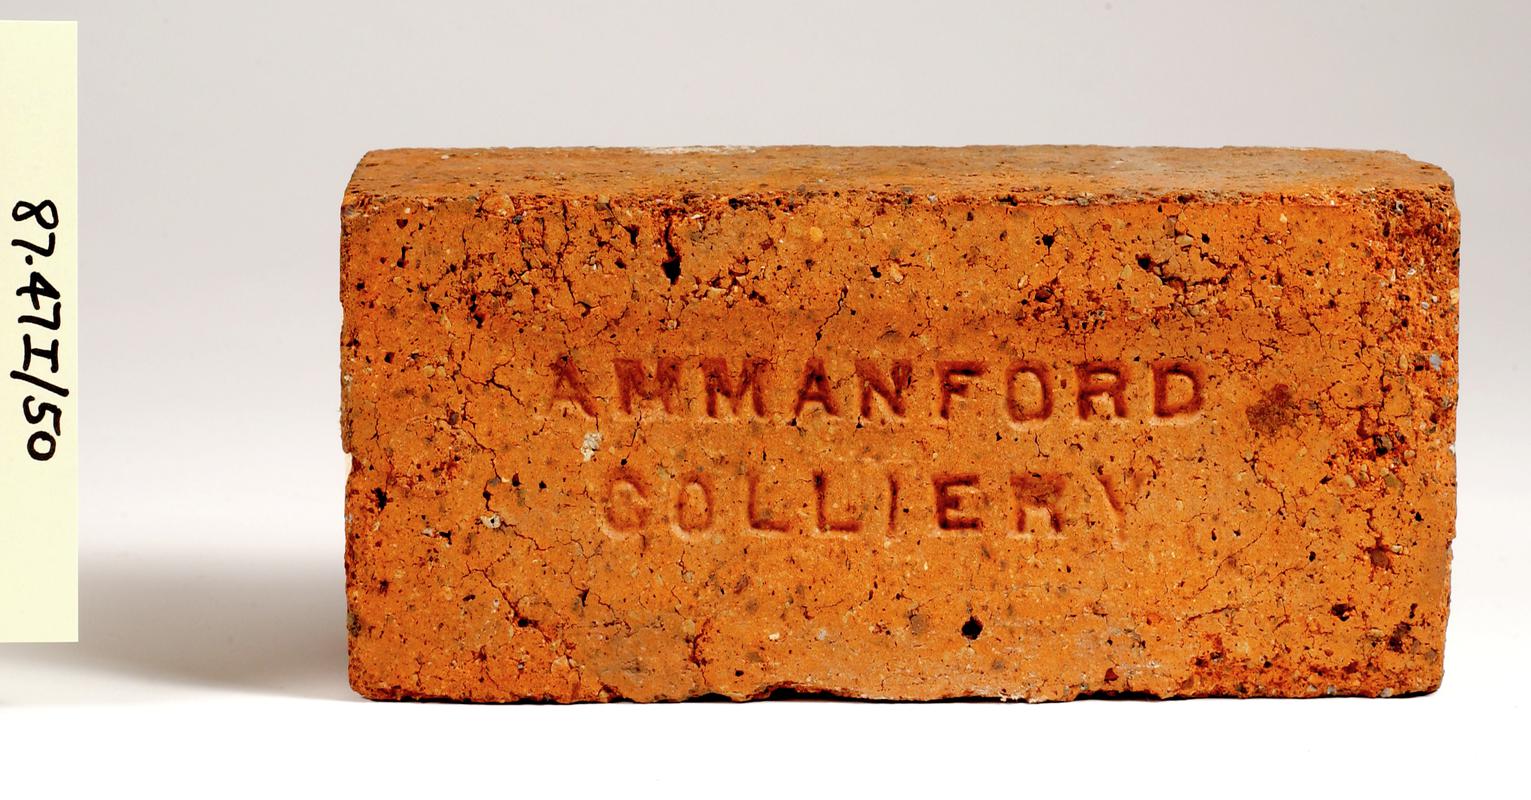 Ammanford Colliery, brick